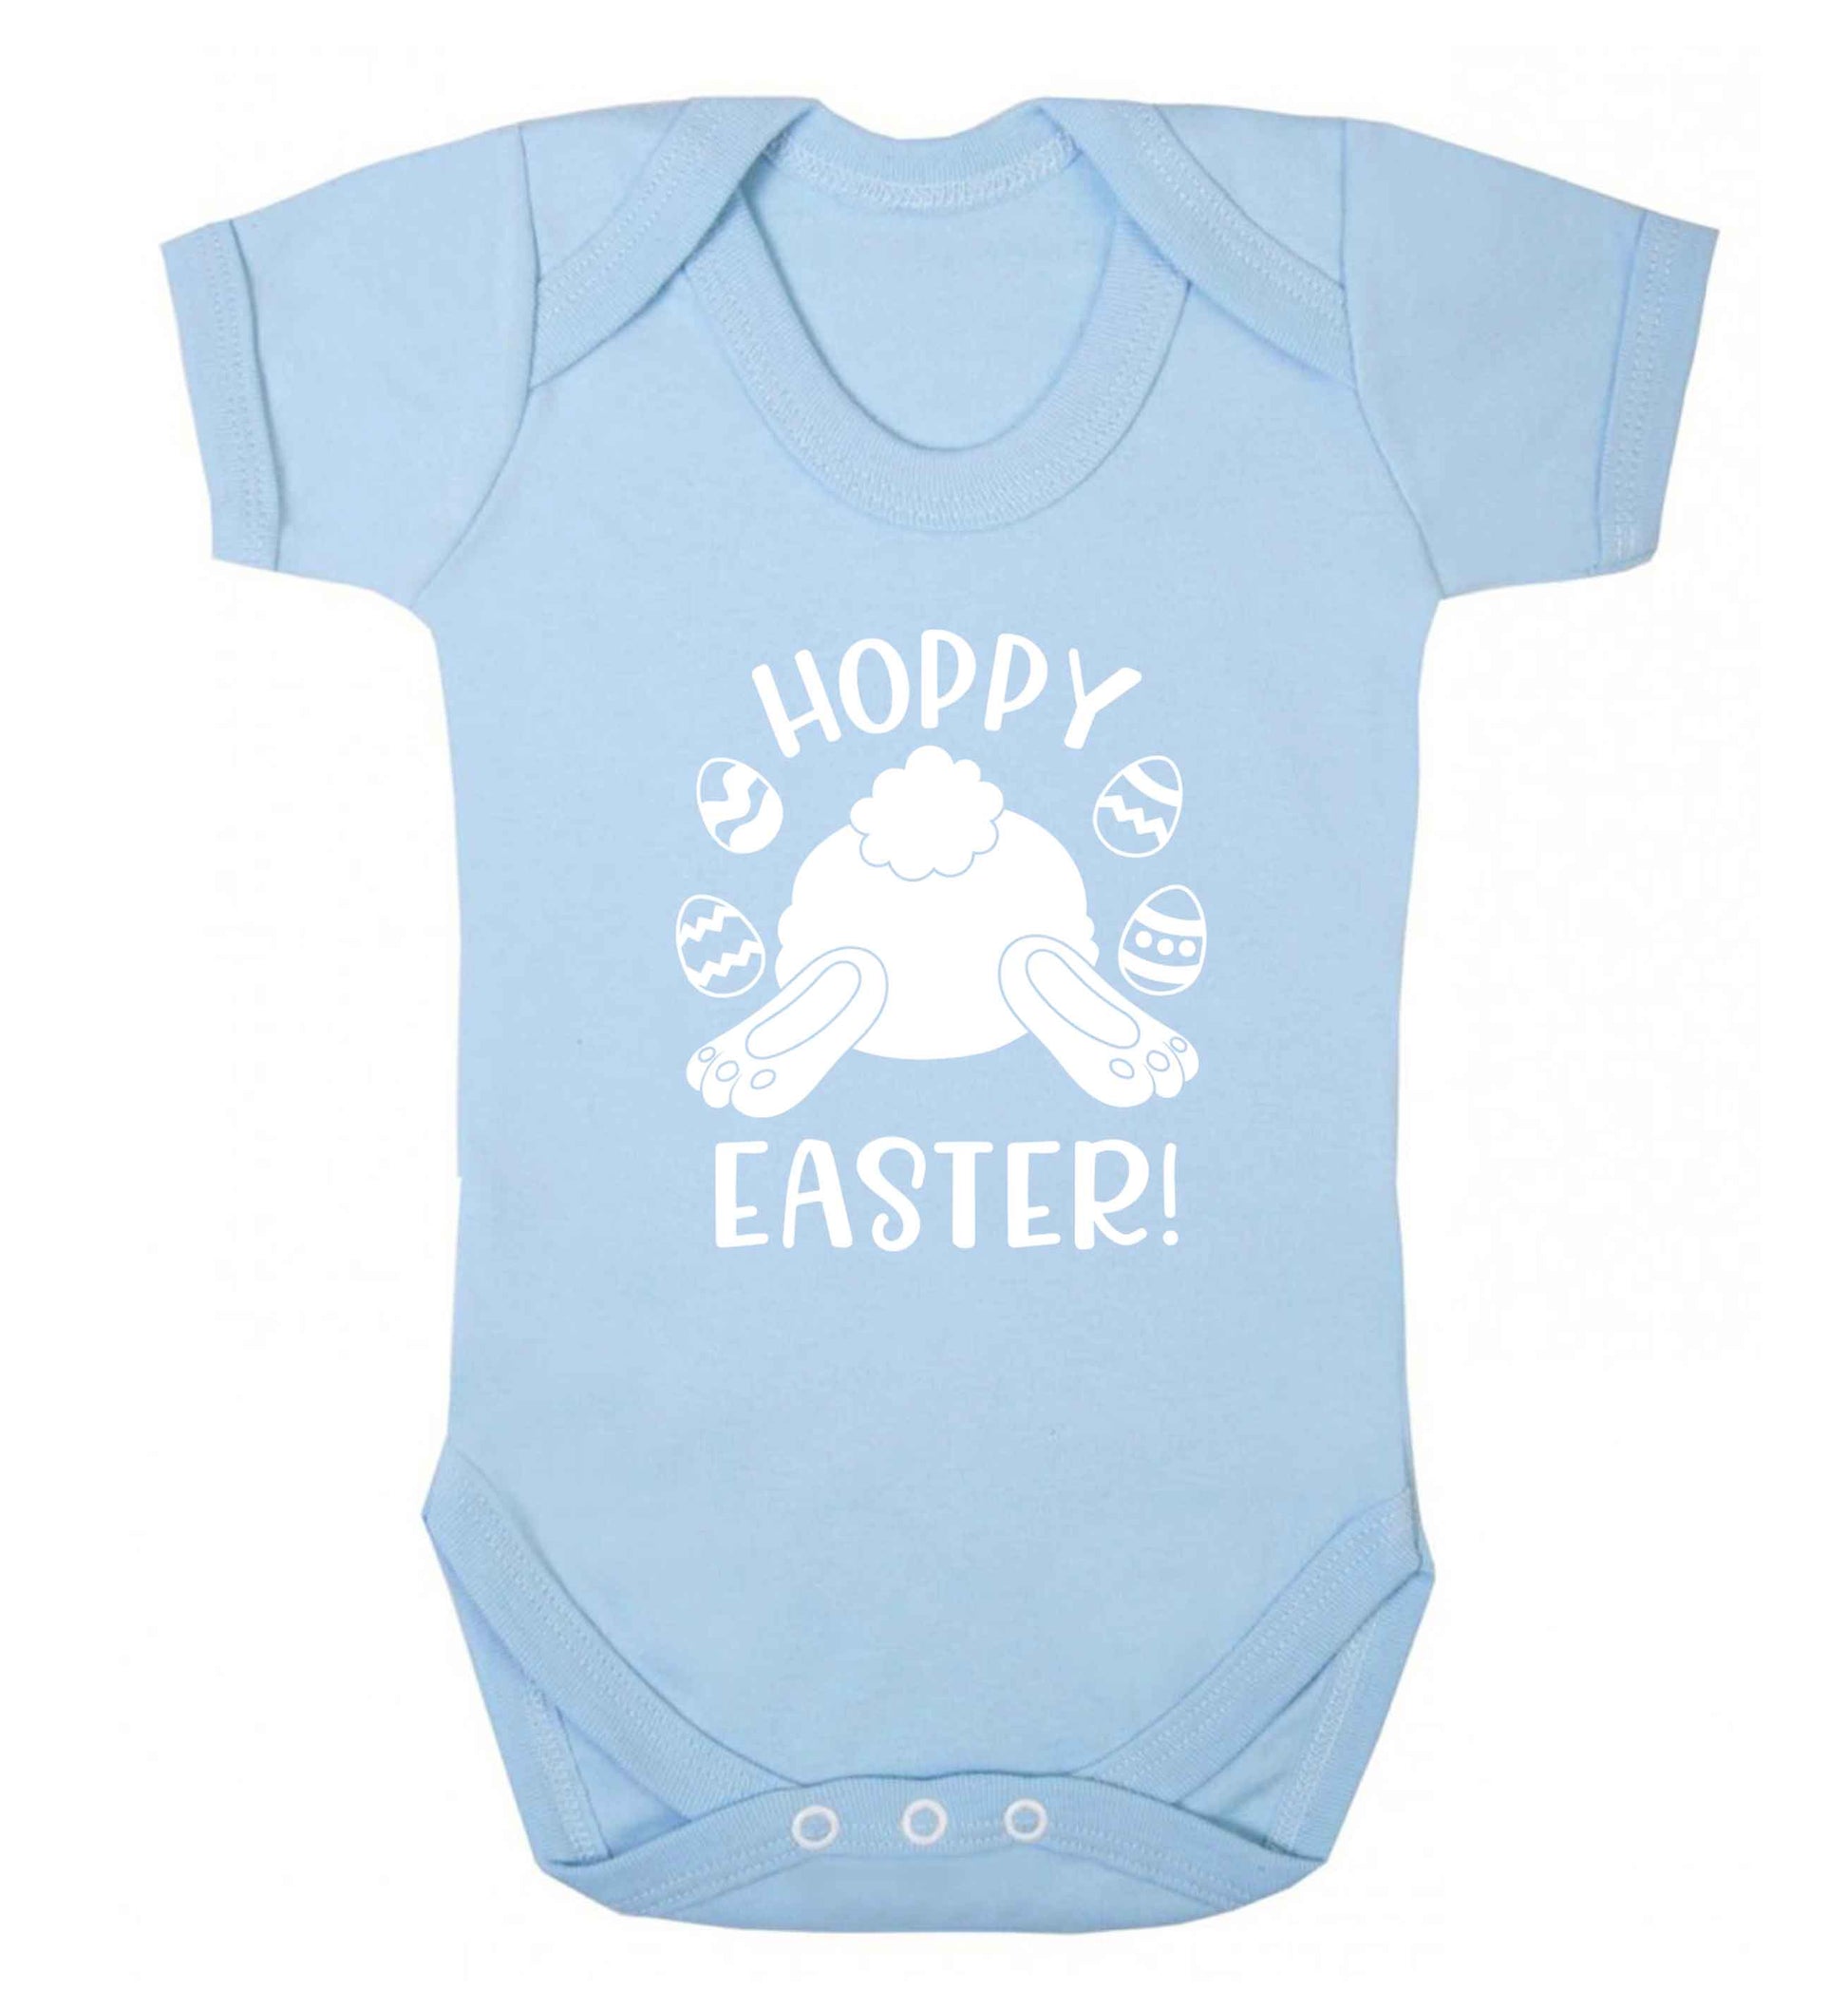 Hoppy Easter baby vest pale blue 18-24 months